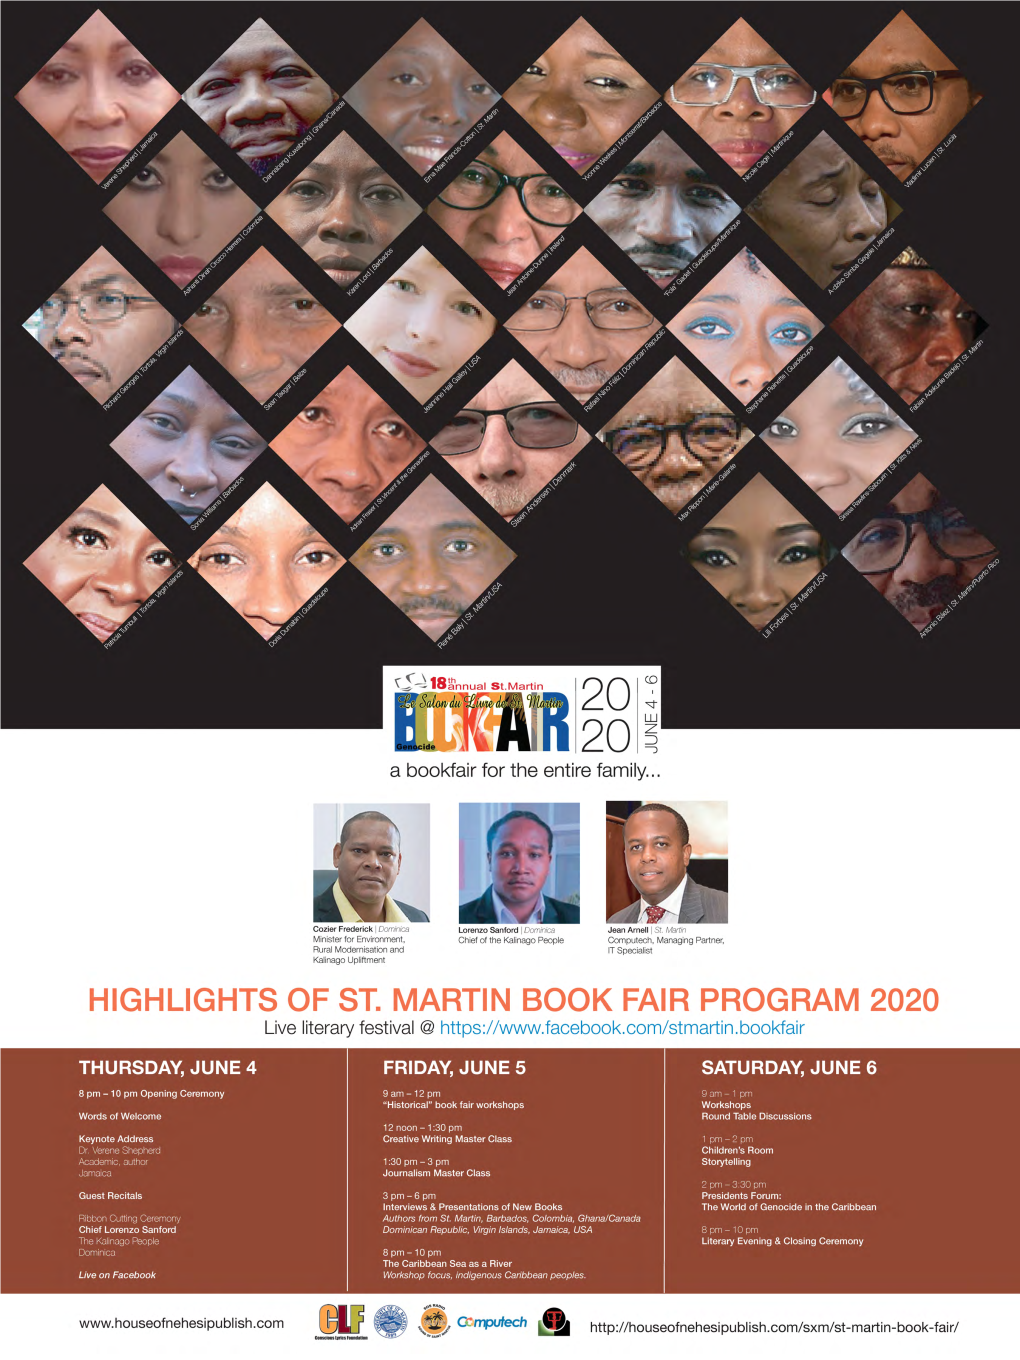 St. Martin Book Fair Program — June 4 – 6, 2020